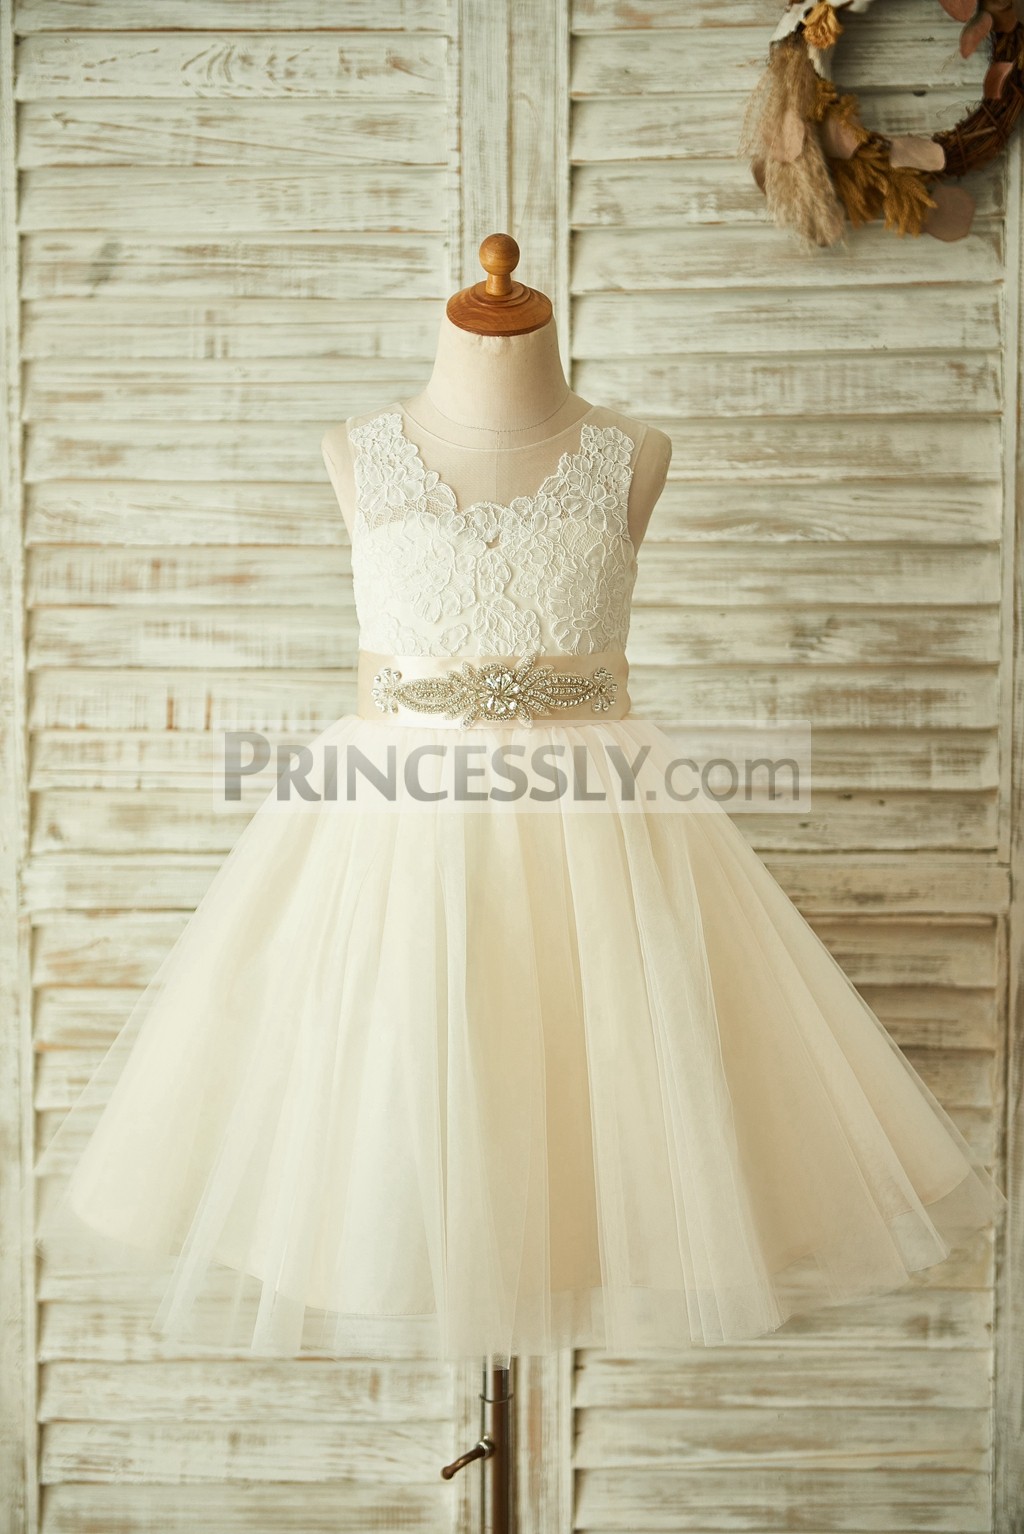 Princessly.com-K1003361-Light Champagne Lace Tulle Sheer Back Wedding Flower Girl Dress with Beaded Belt-31